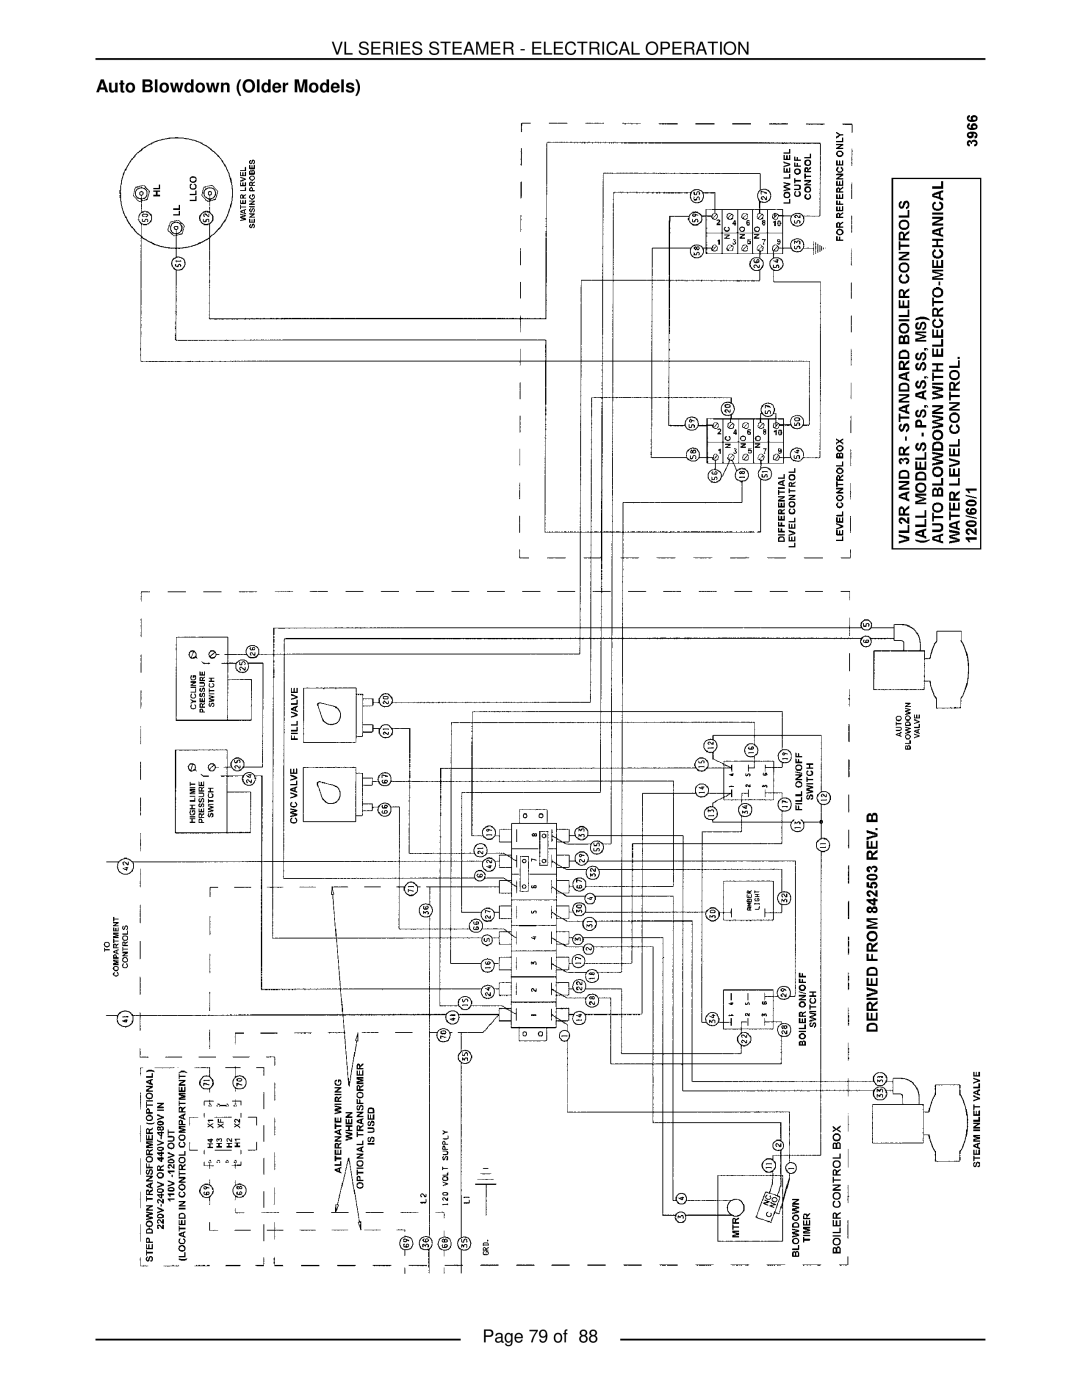 Vulcan-Hart VL2GPS, VL3GMS, VL2GMS, VL3GAS Vl Series Steamer - Electrical Operation, Auto Blowdown Older Models, Page 79 of 